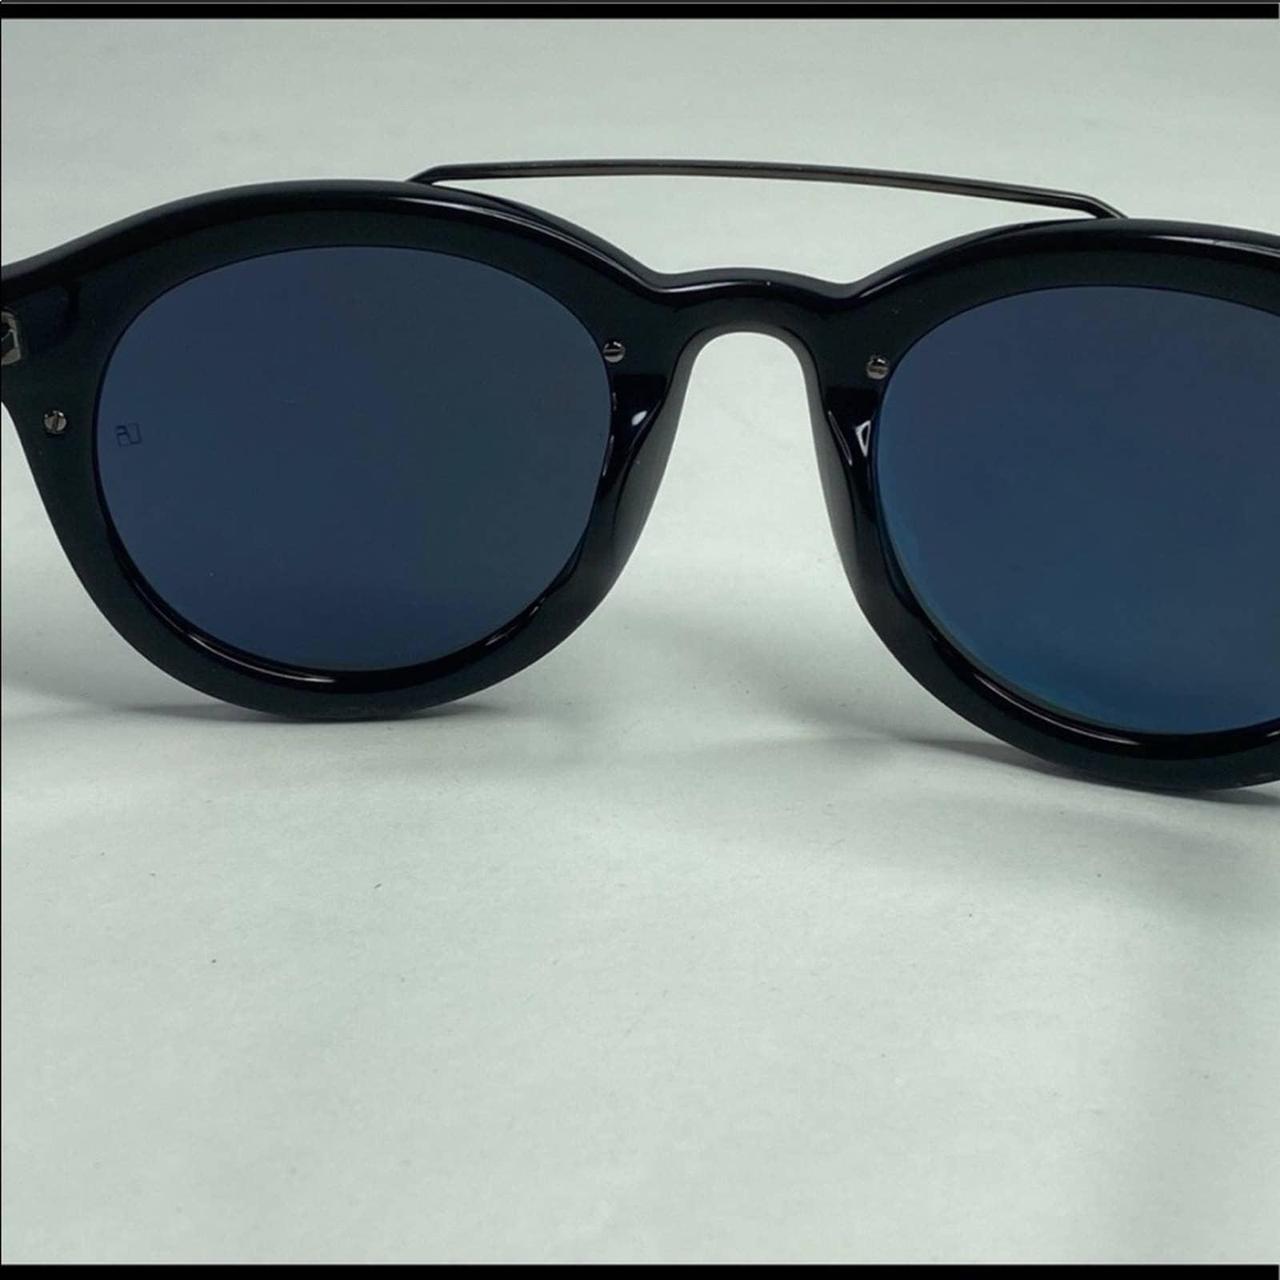 Product Image 4 - Linda farrow black frame sunglasses
Has